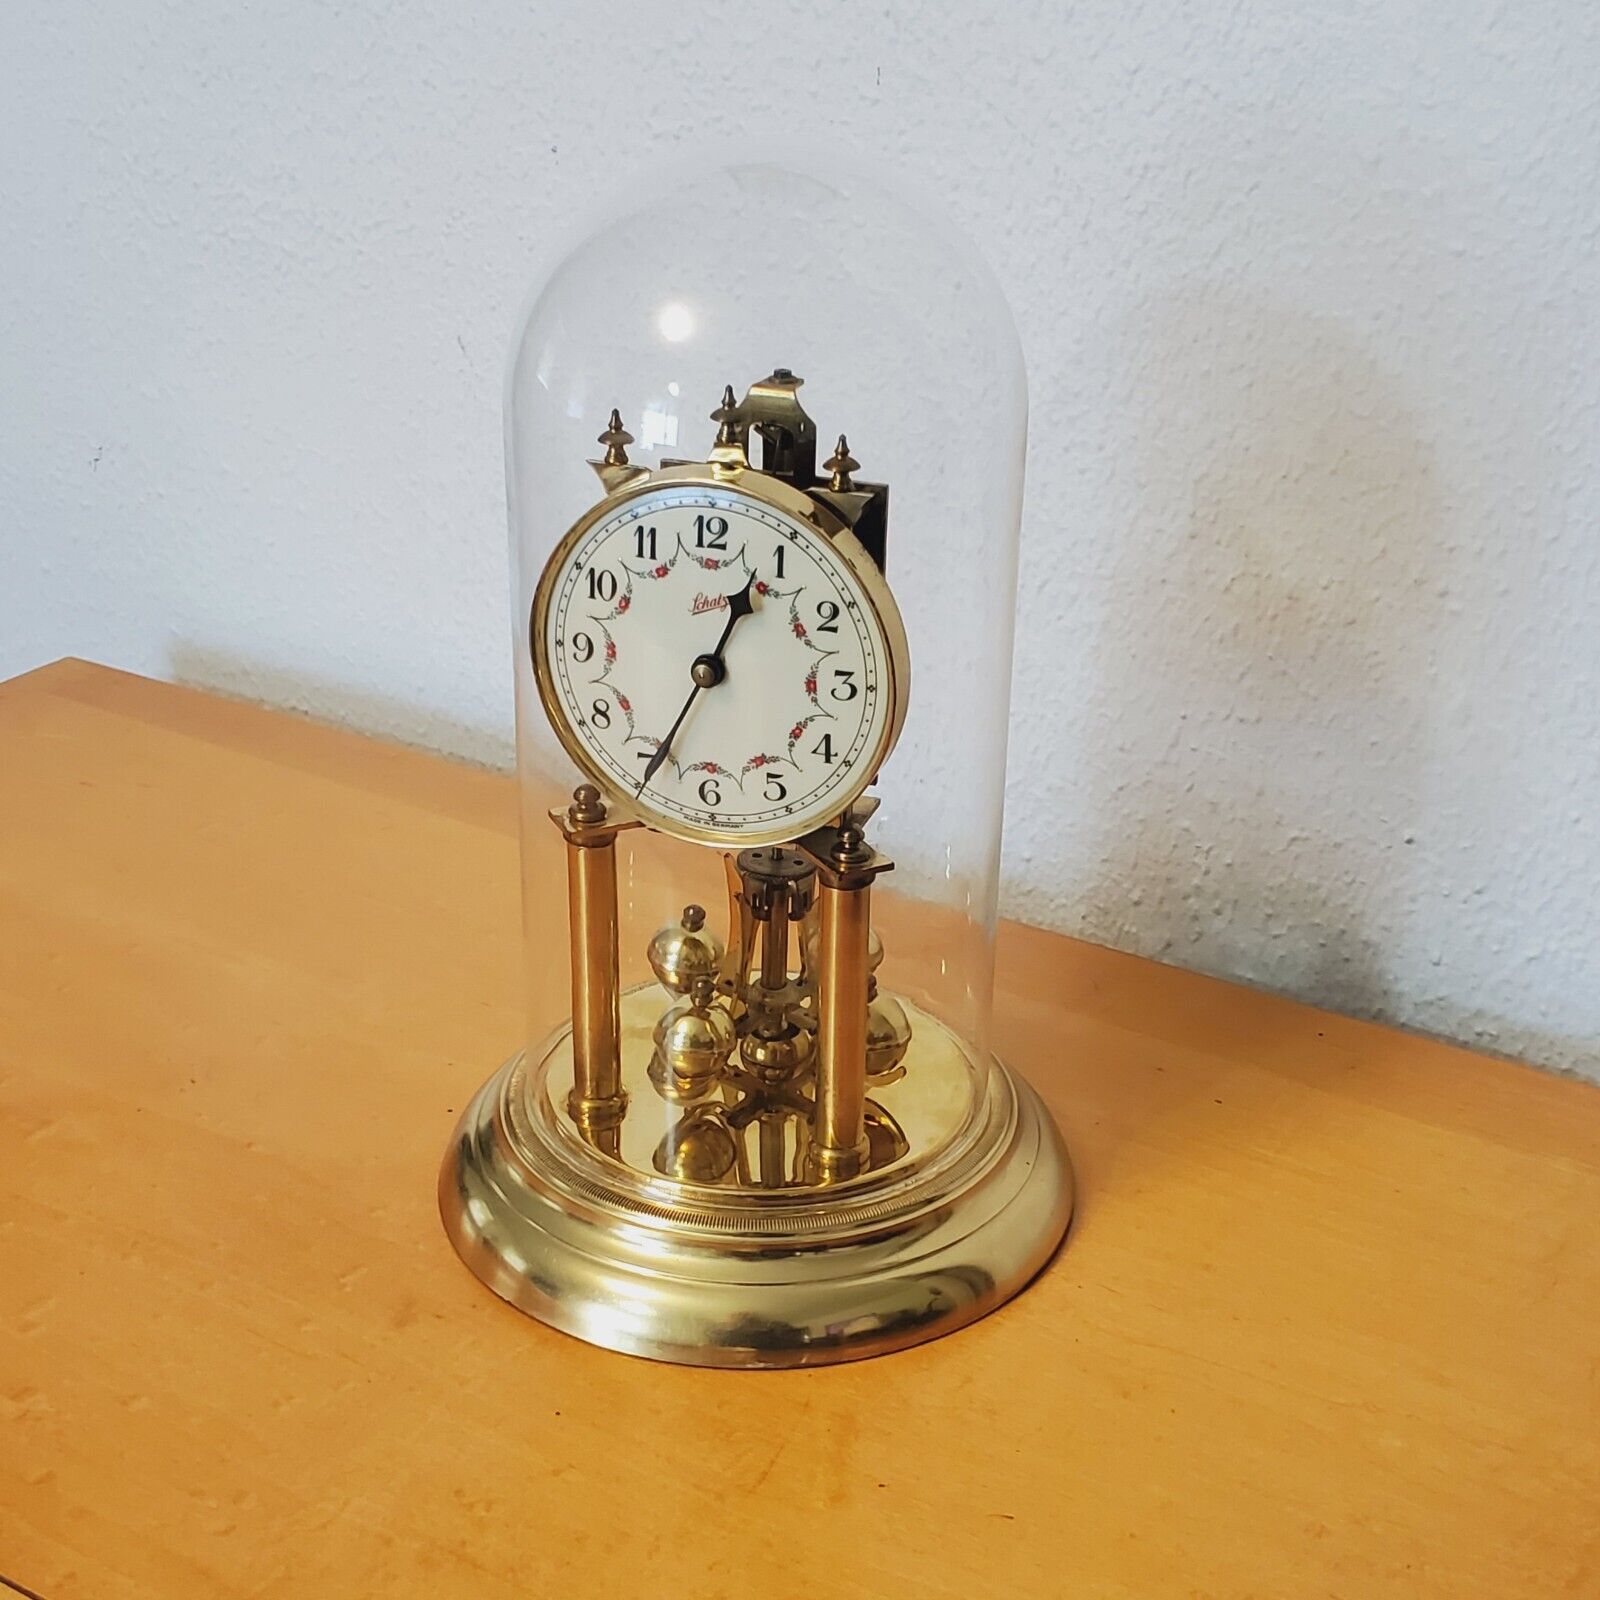 Vintage Jahrsuhrenfabrik Schatz Anniversary Clock #49 Glass Dome Porcelain Face